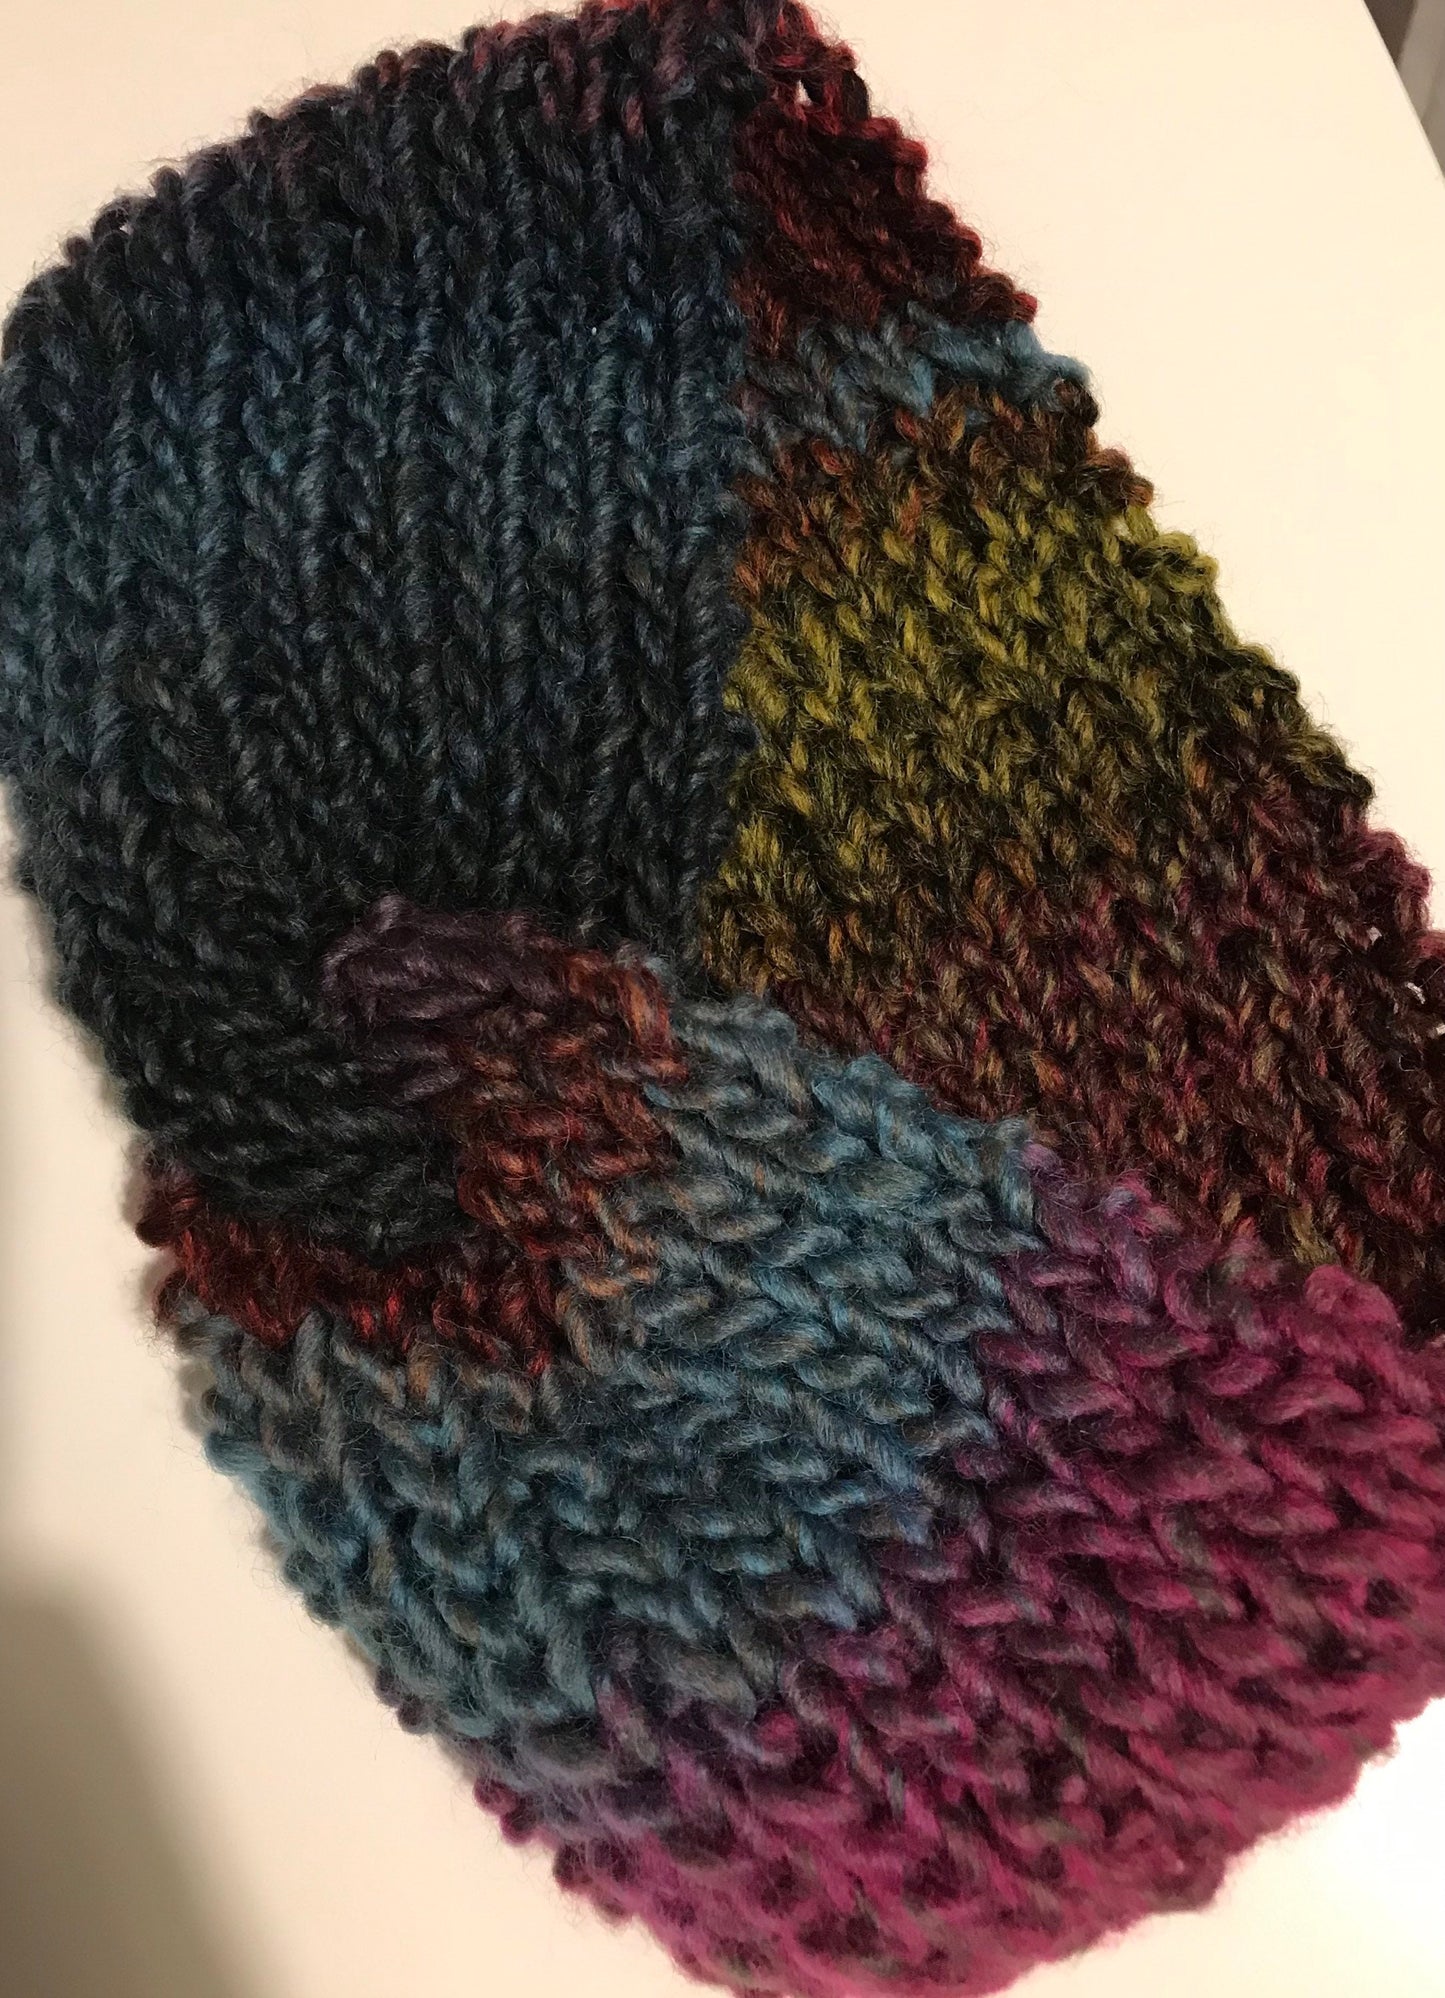 Knit Headband, Knit Turban, Winter Headband, Knitted Ear Warmer, Autumn Colors Headband, Degrade Turban